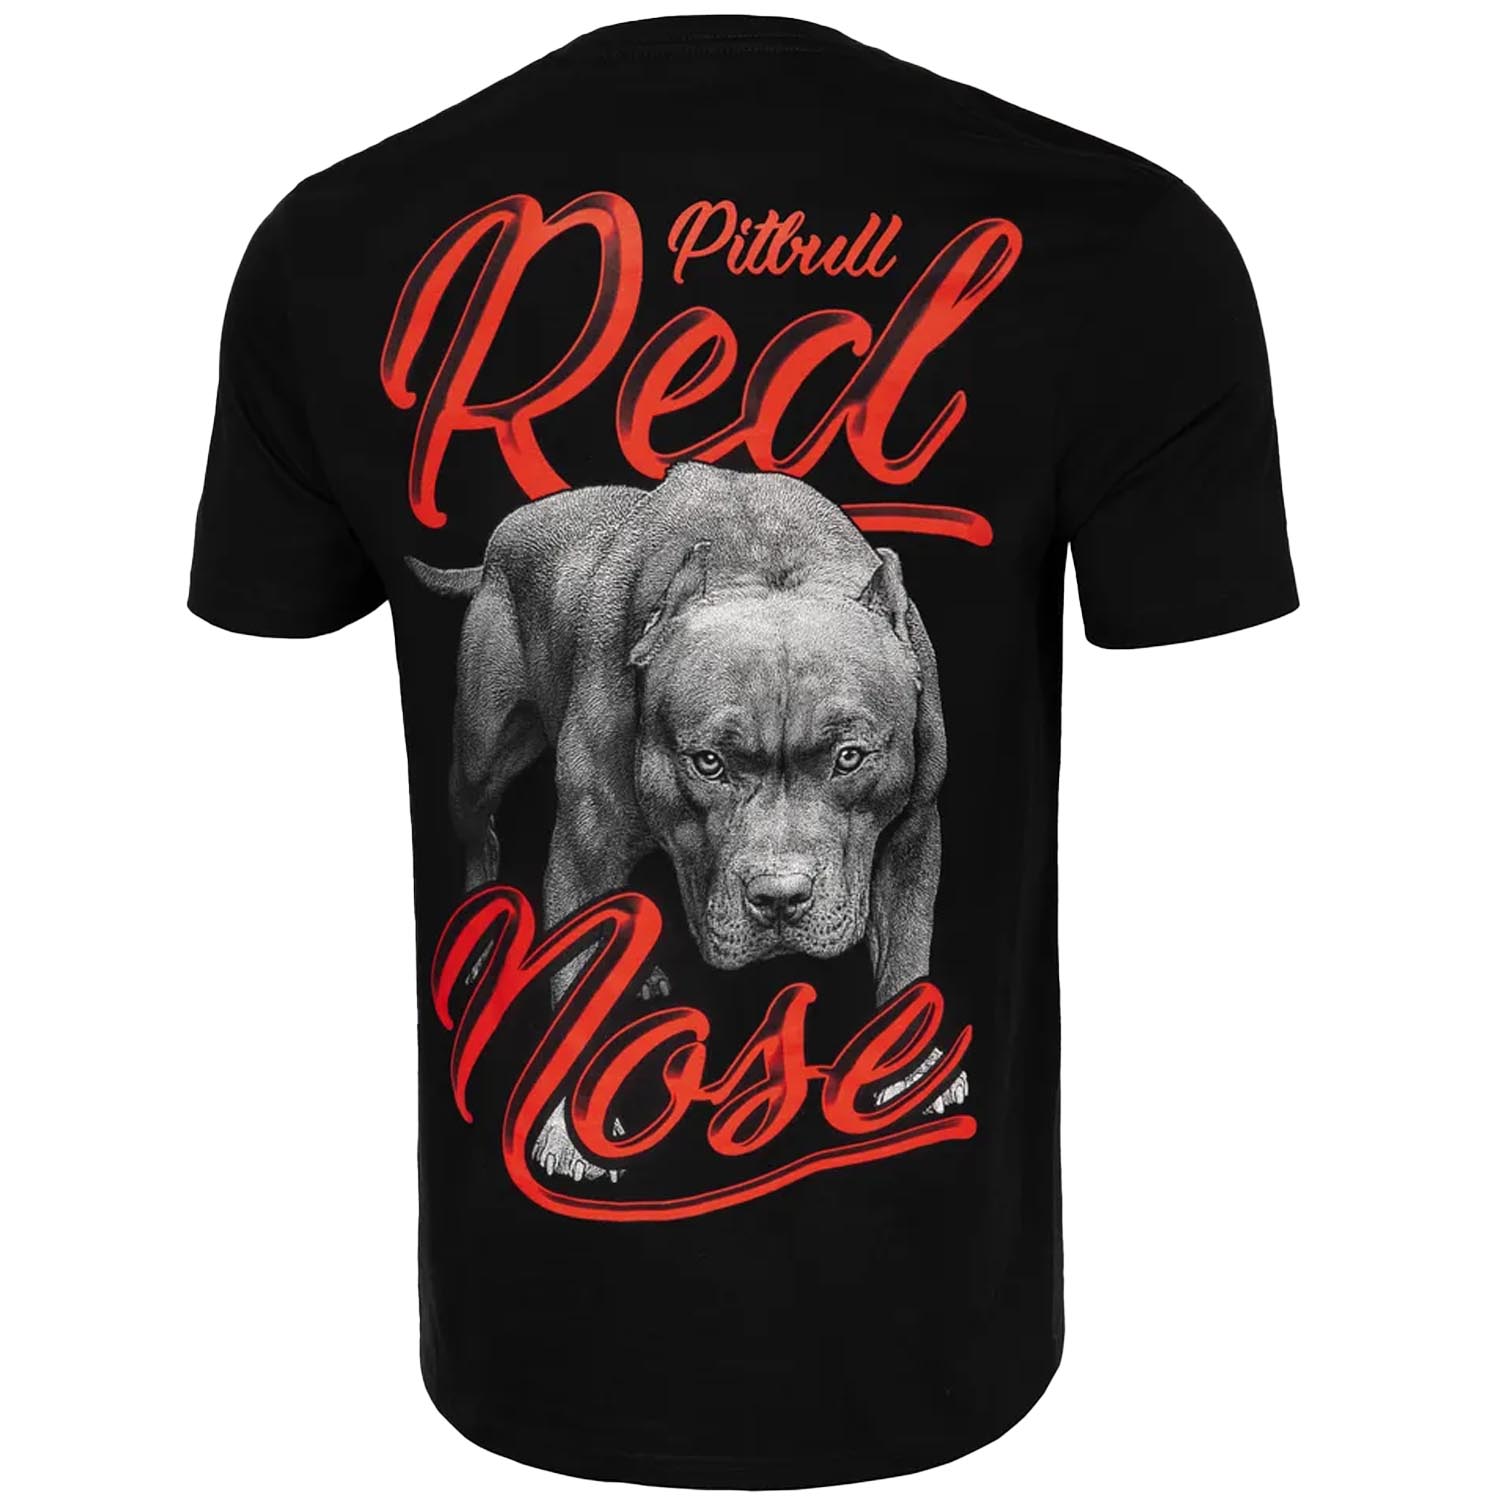 Pit Bull West Coast T-Shirt, Red Nose 23, schwarz-rot, XXXL